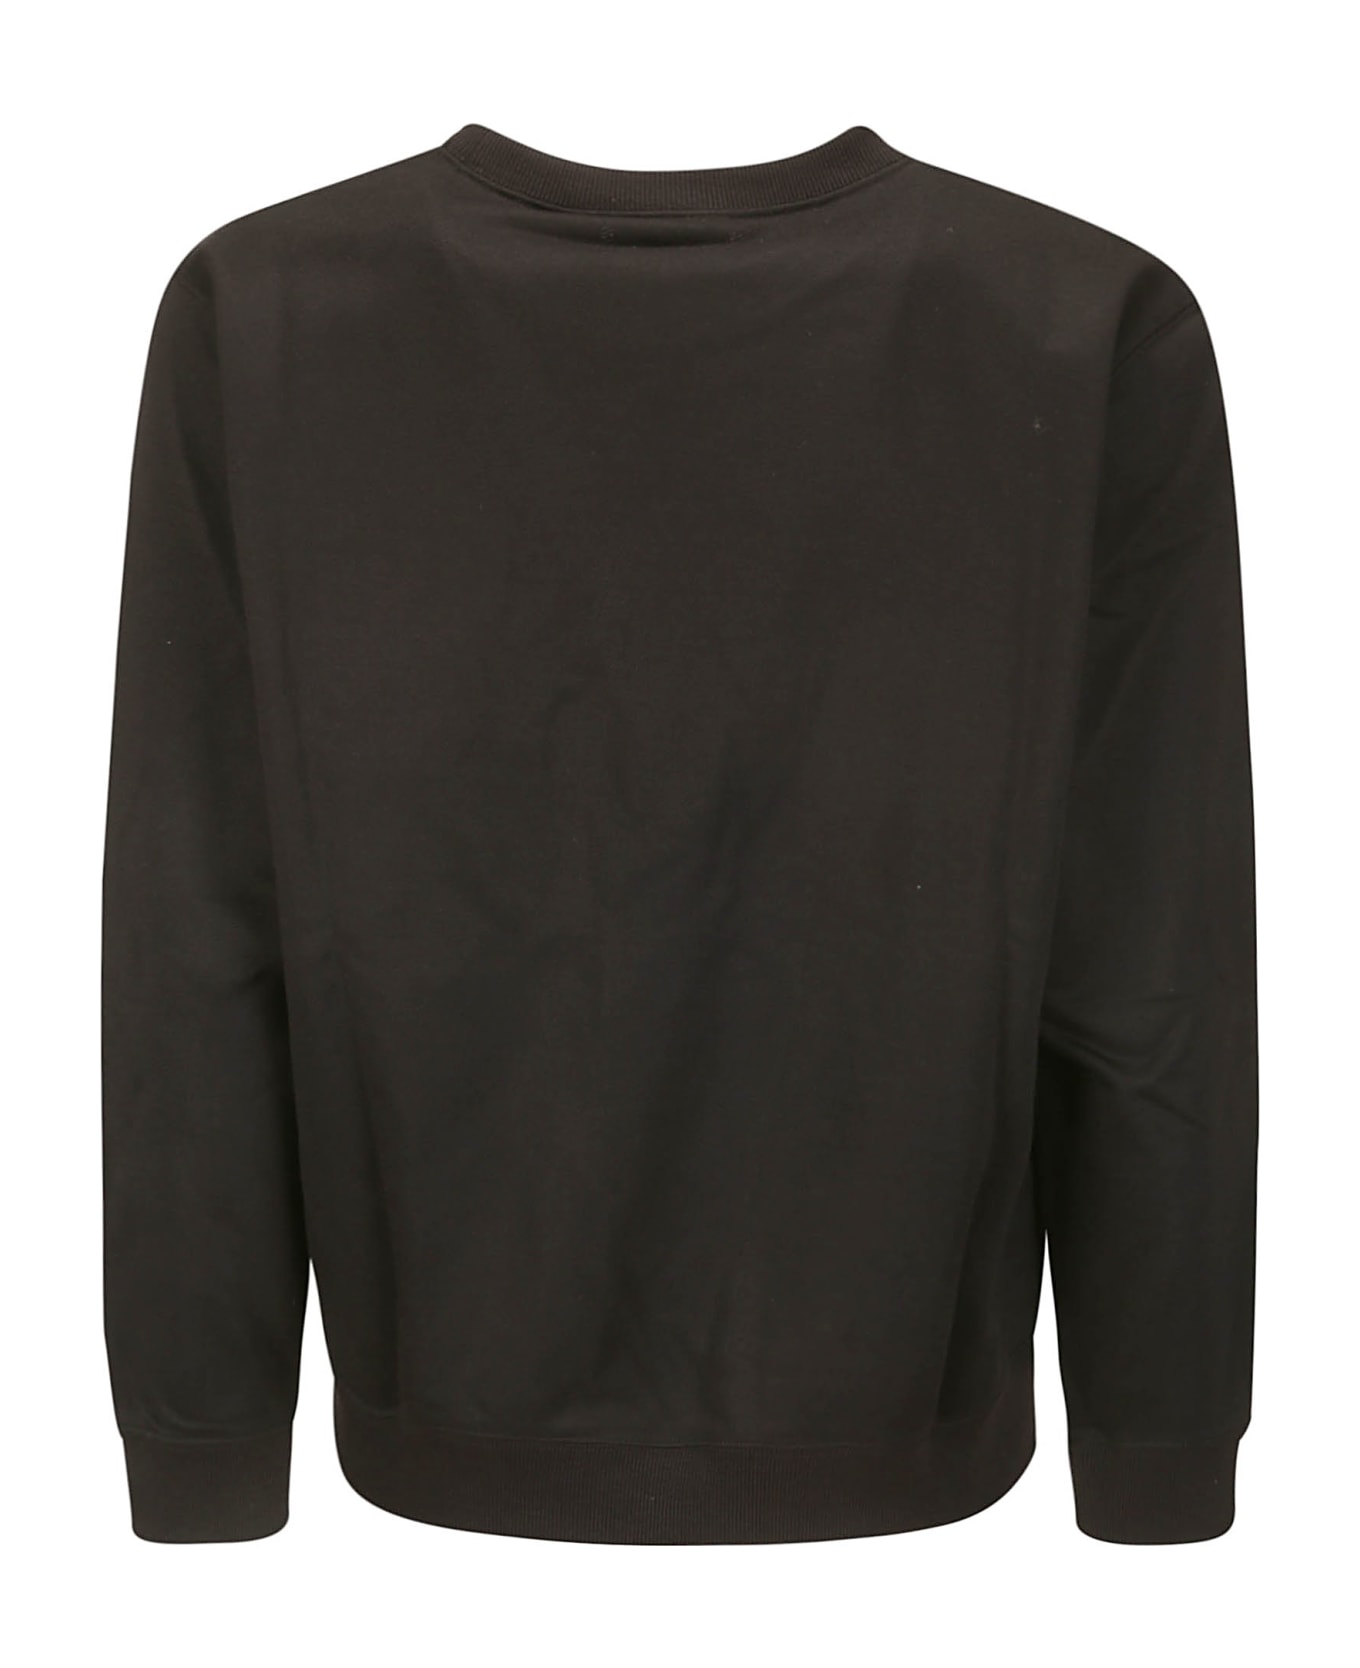 Gramicci Print Sweatshirt - BLACK